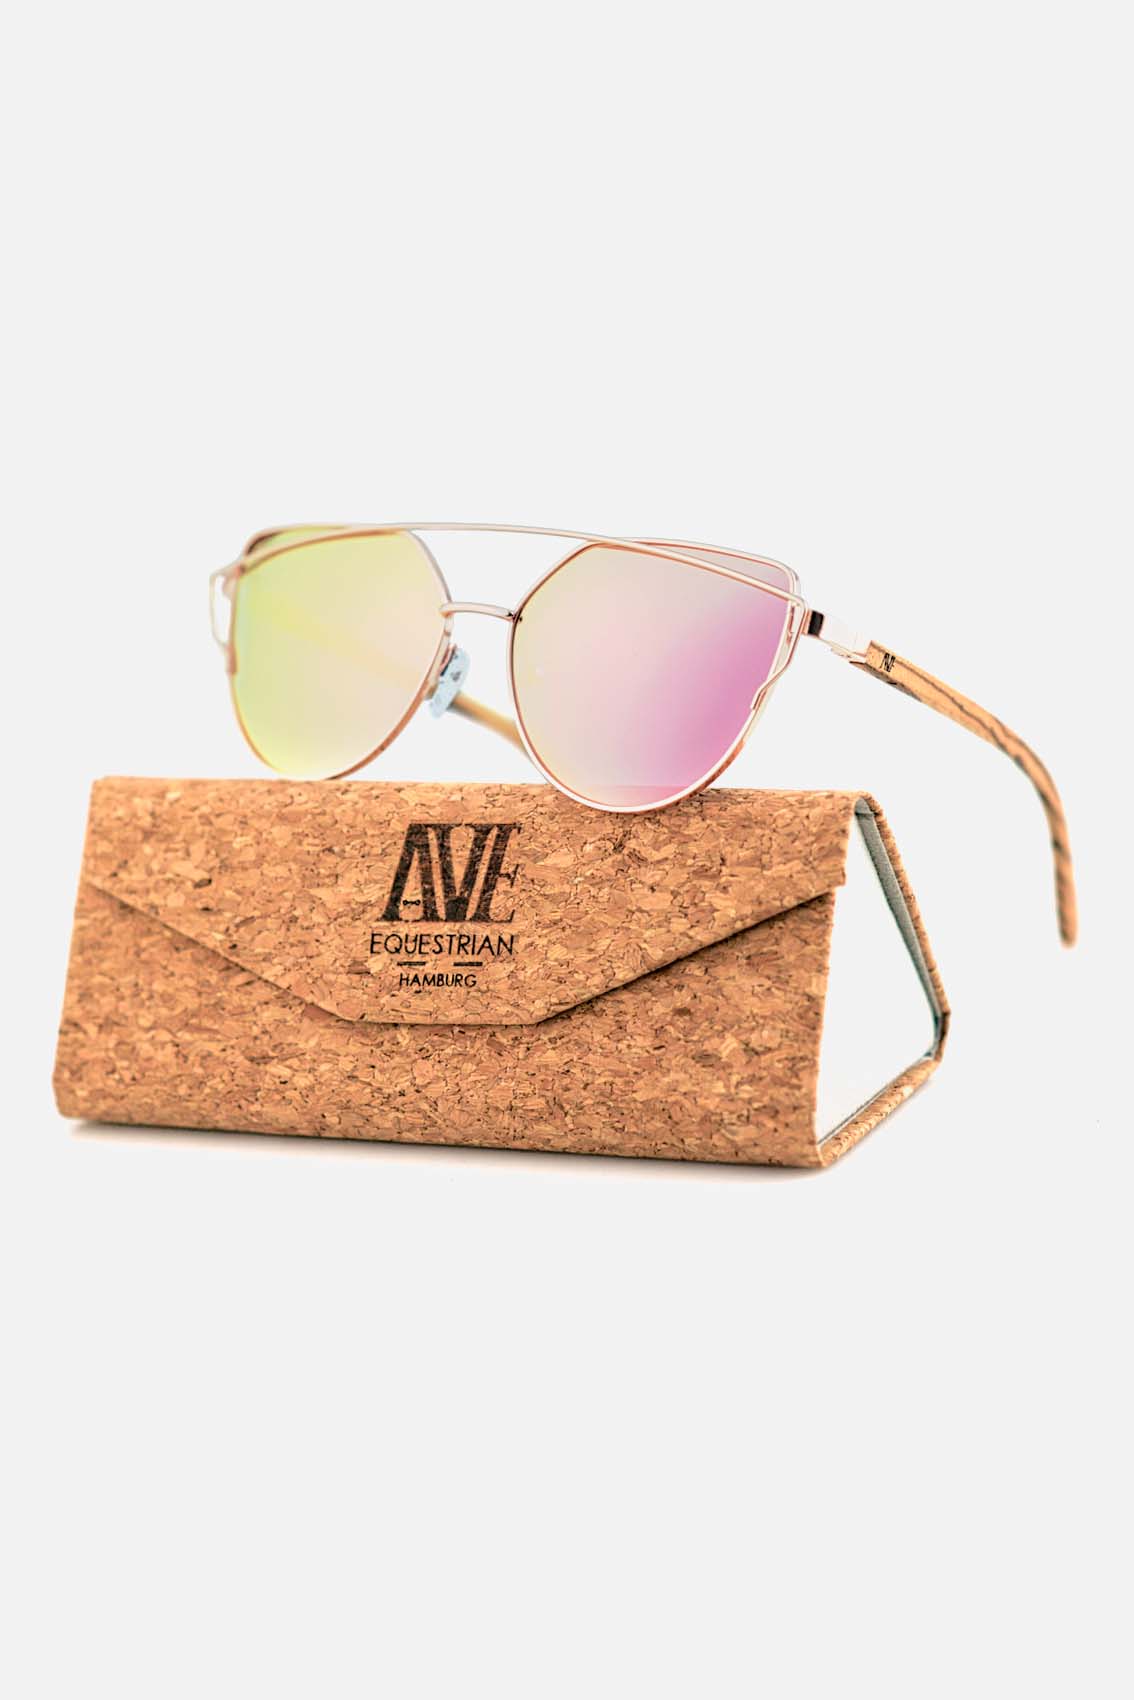 edition AVE Gold | Equestrian Women | sunglasses